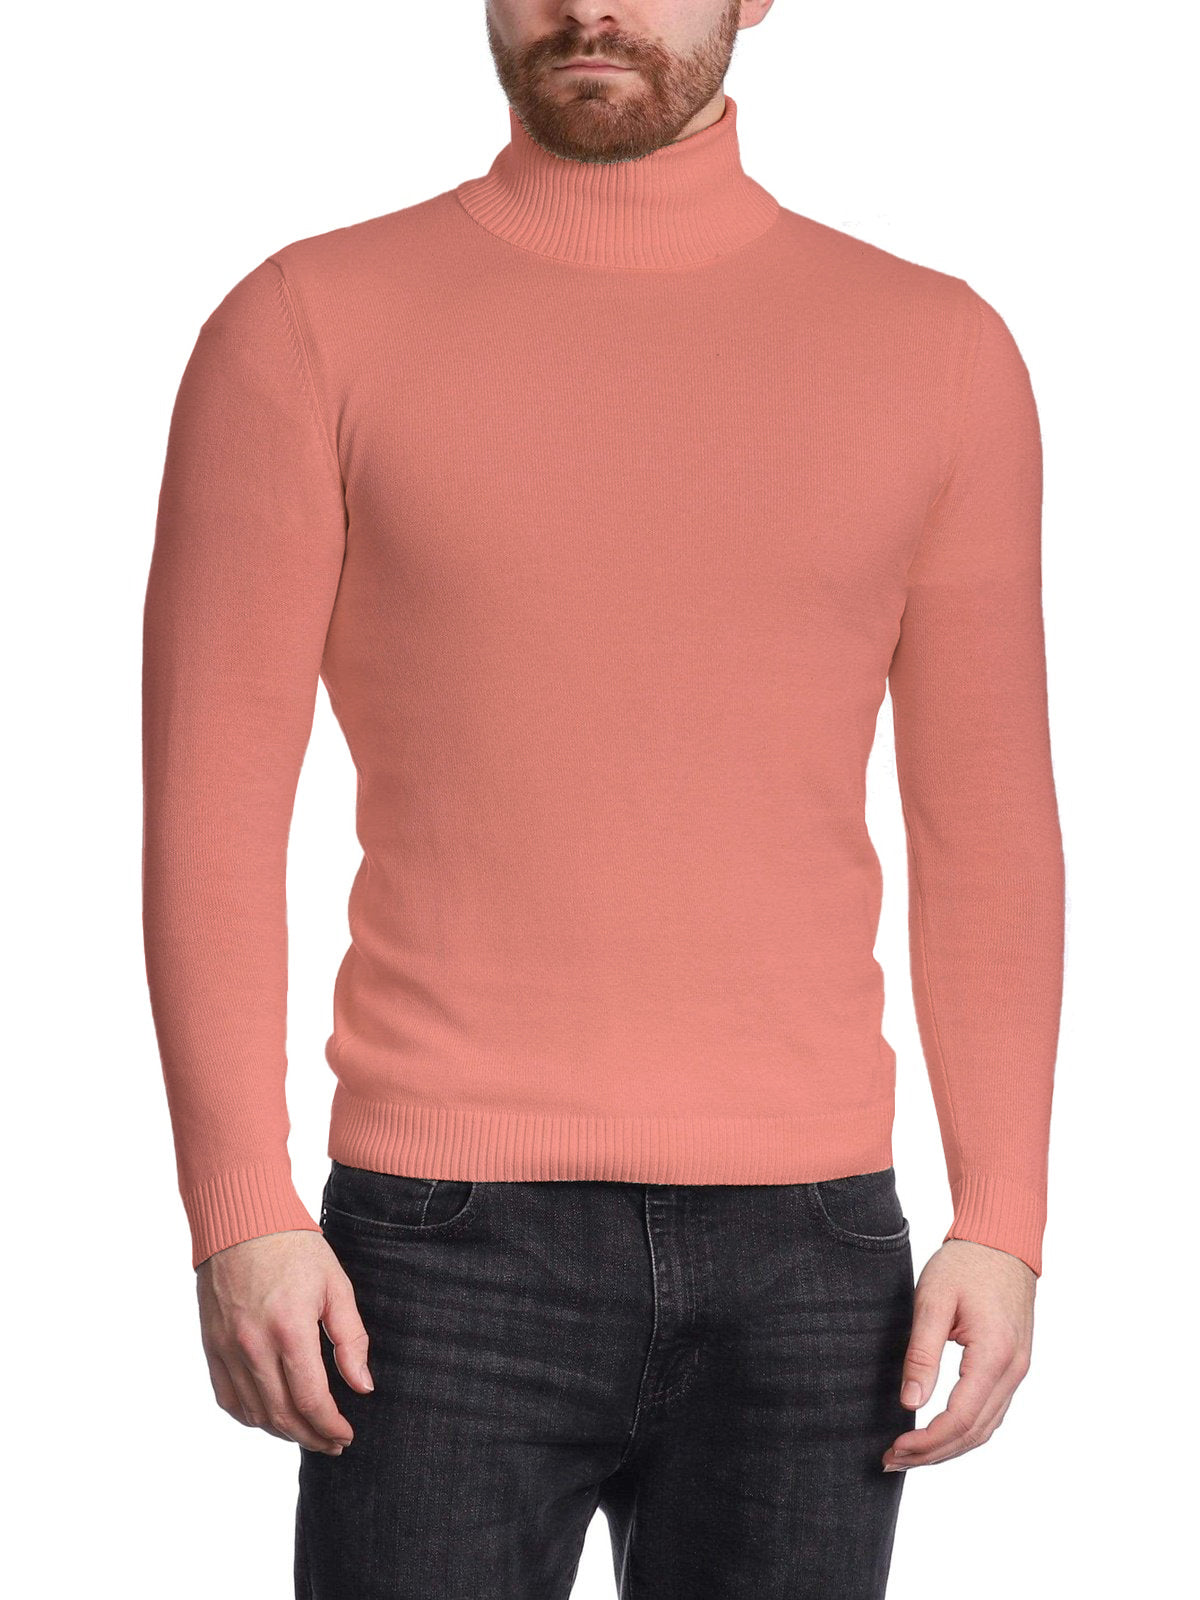 Arthur Black Men's Dusty Rose Pullover Cotton Blend Turtleneck Sweater Shirt